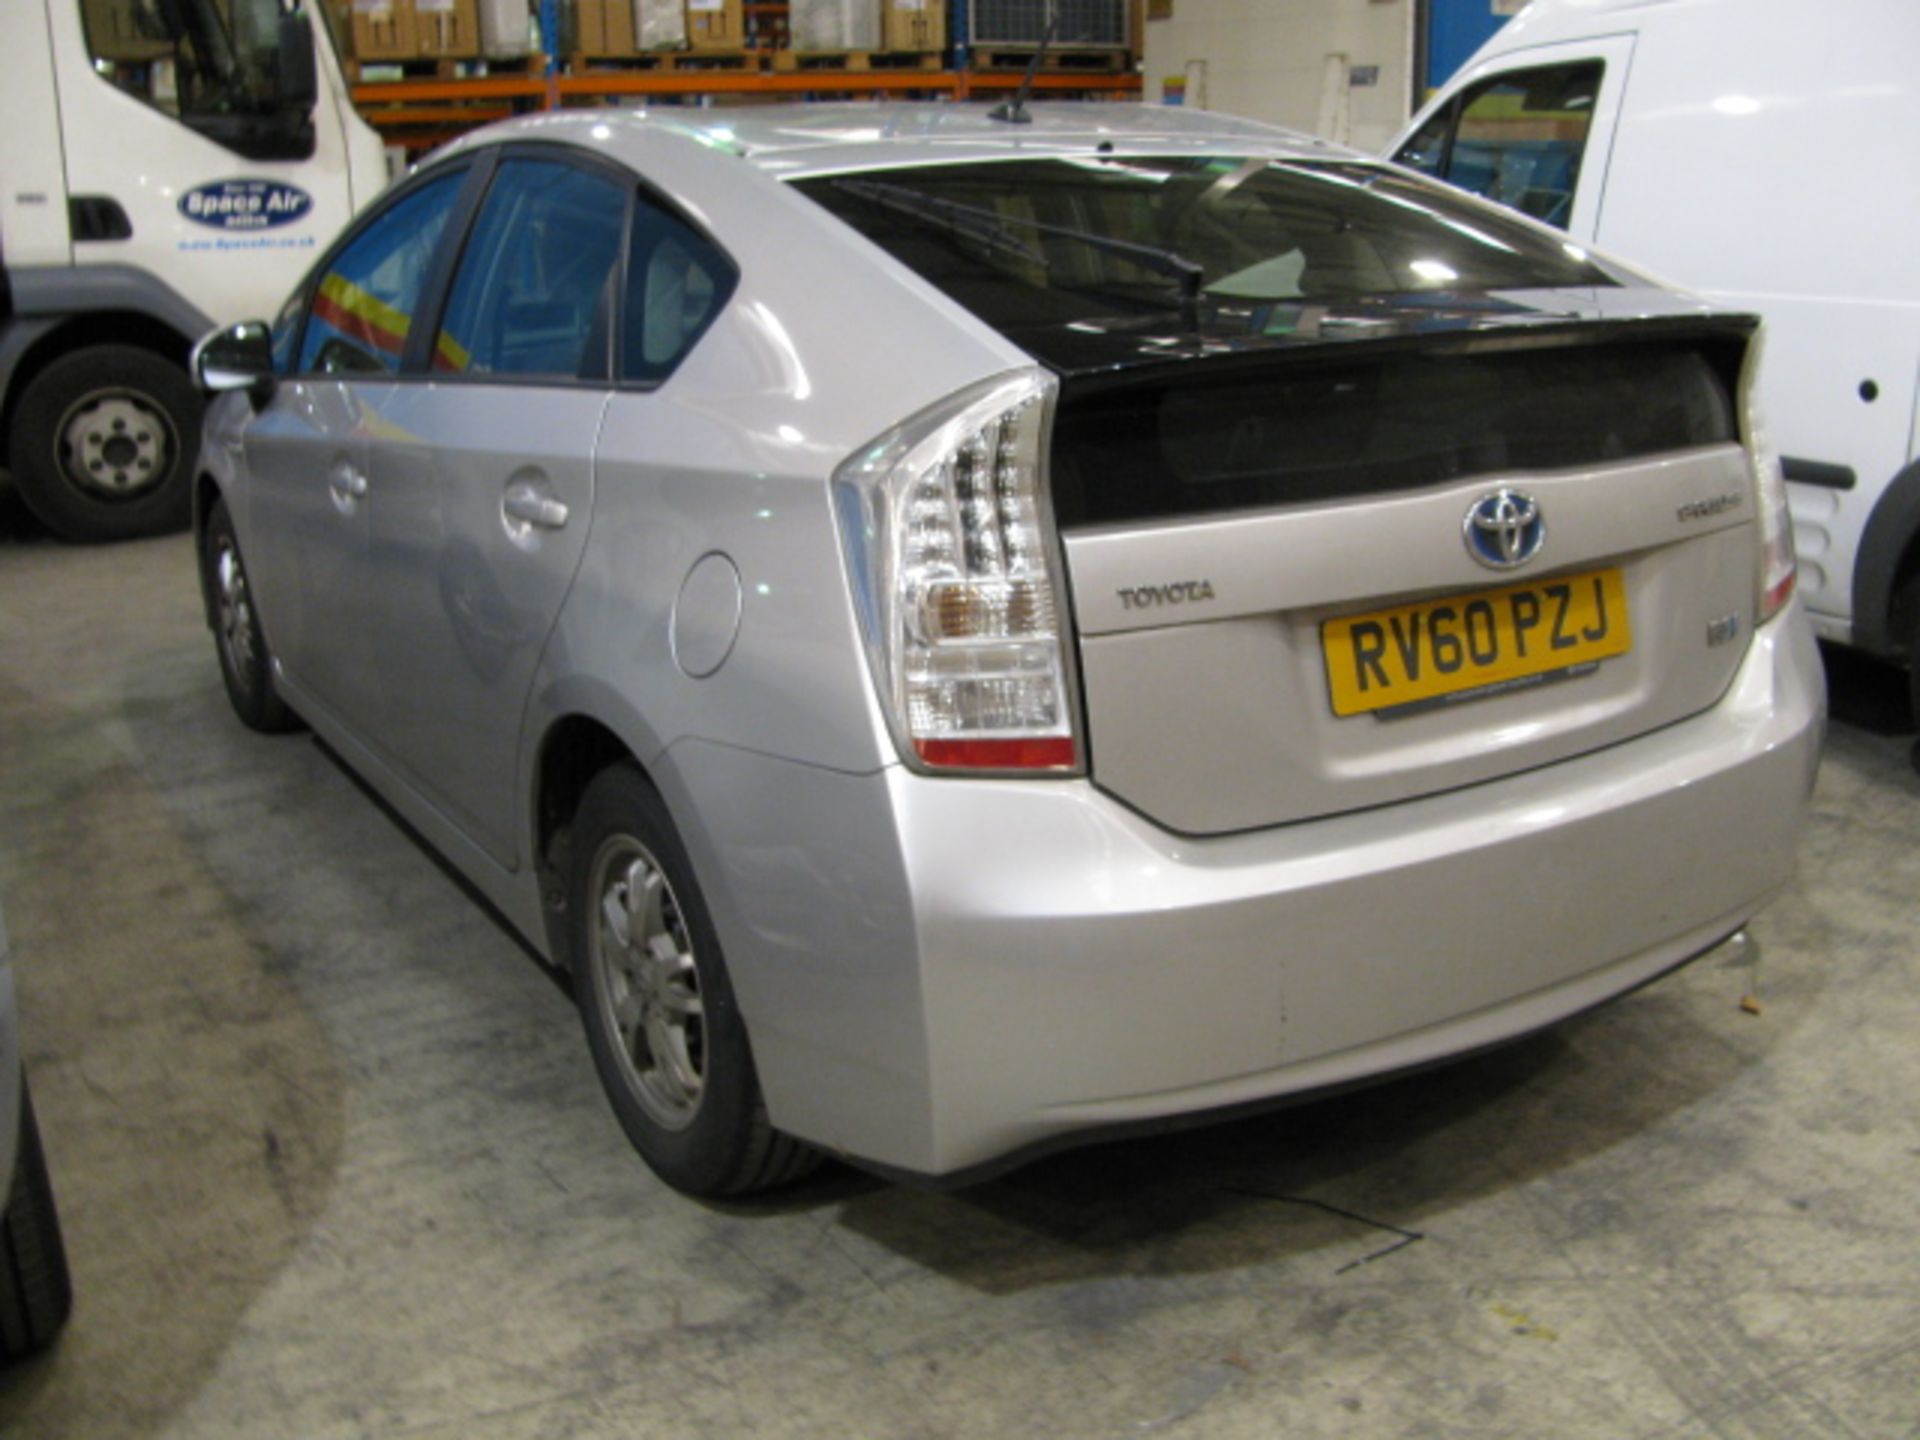 Toyota Prius T3 VVT hybrid electric 4 door hatchback, reg RV60 PZJ, miles: 163,412 - Image 6 of 6